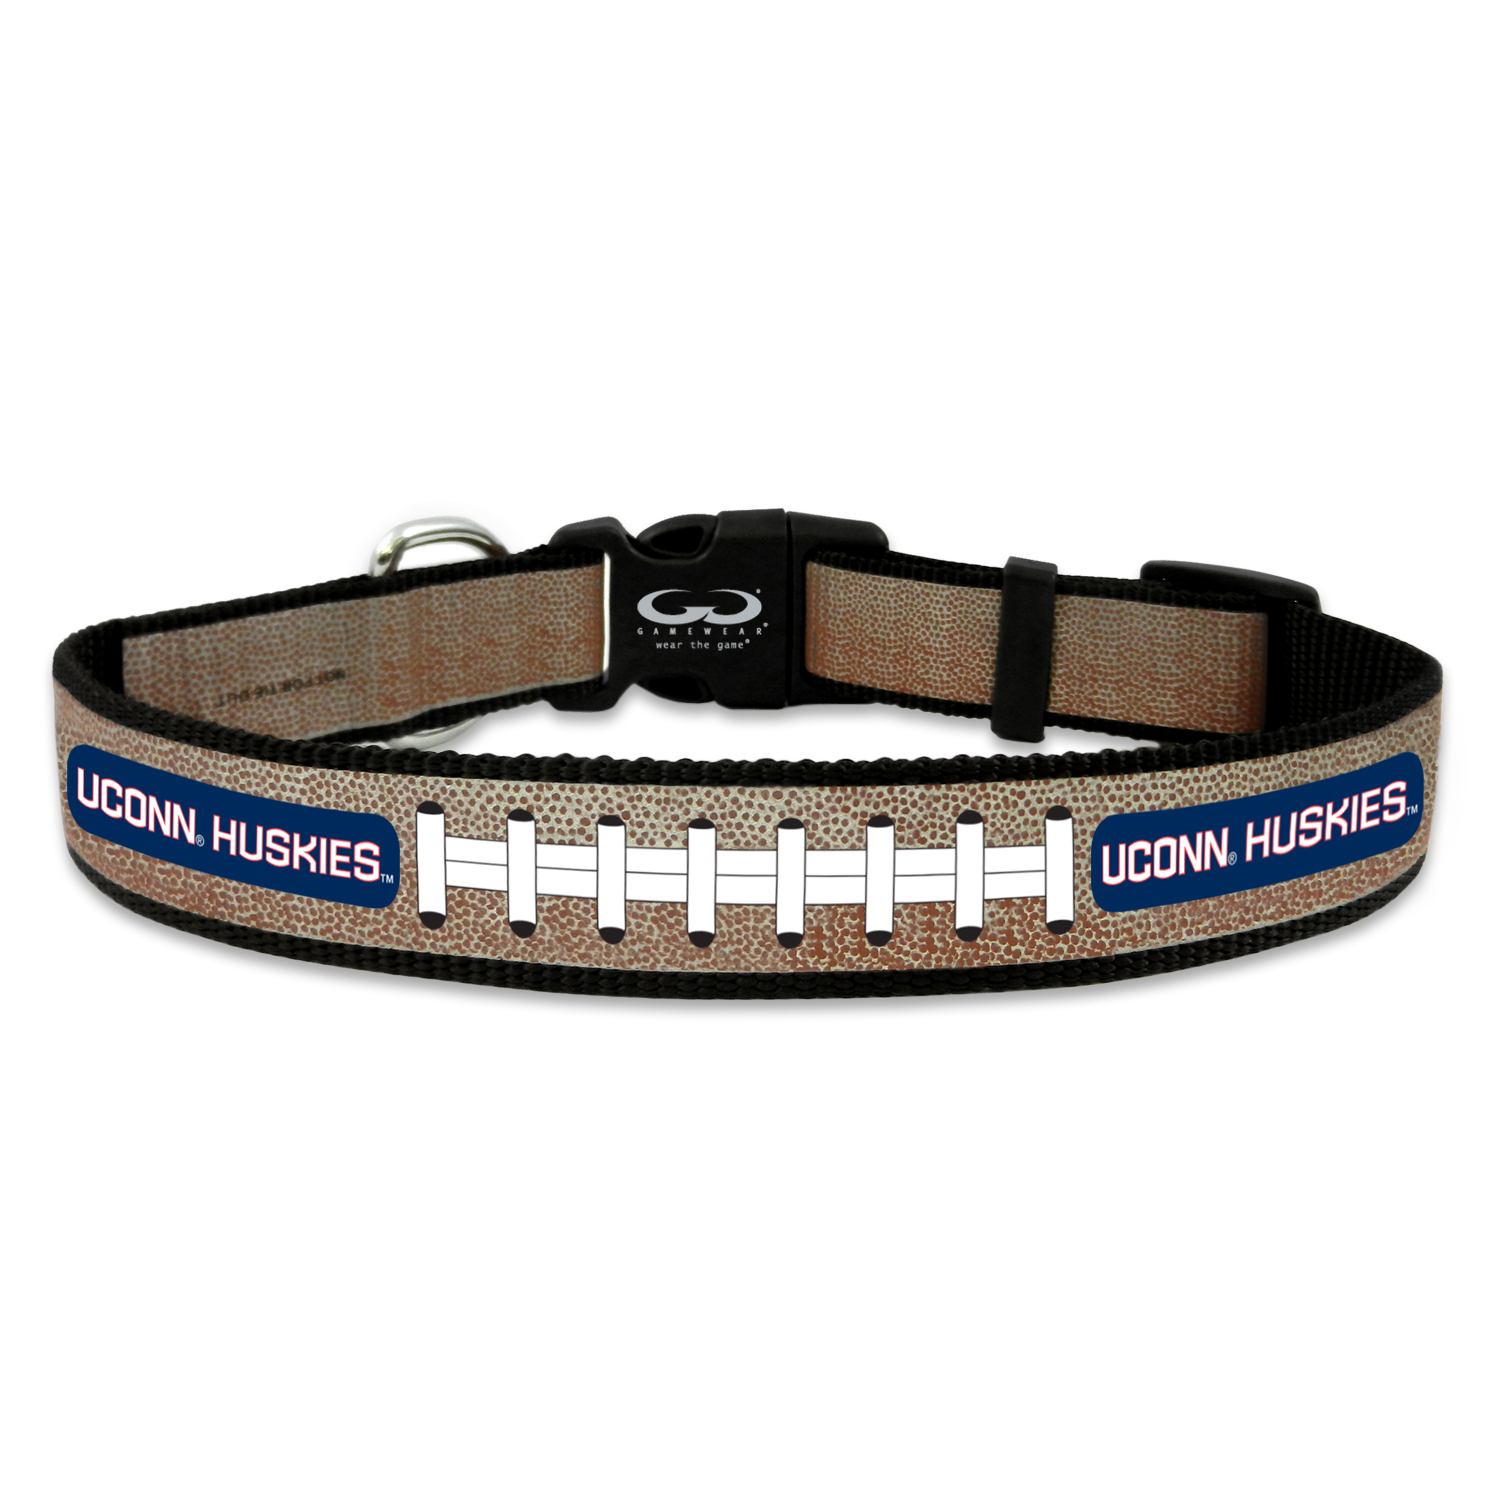 GAMEWEAR Connecticut Huskies Reflective Football Collar